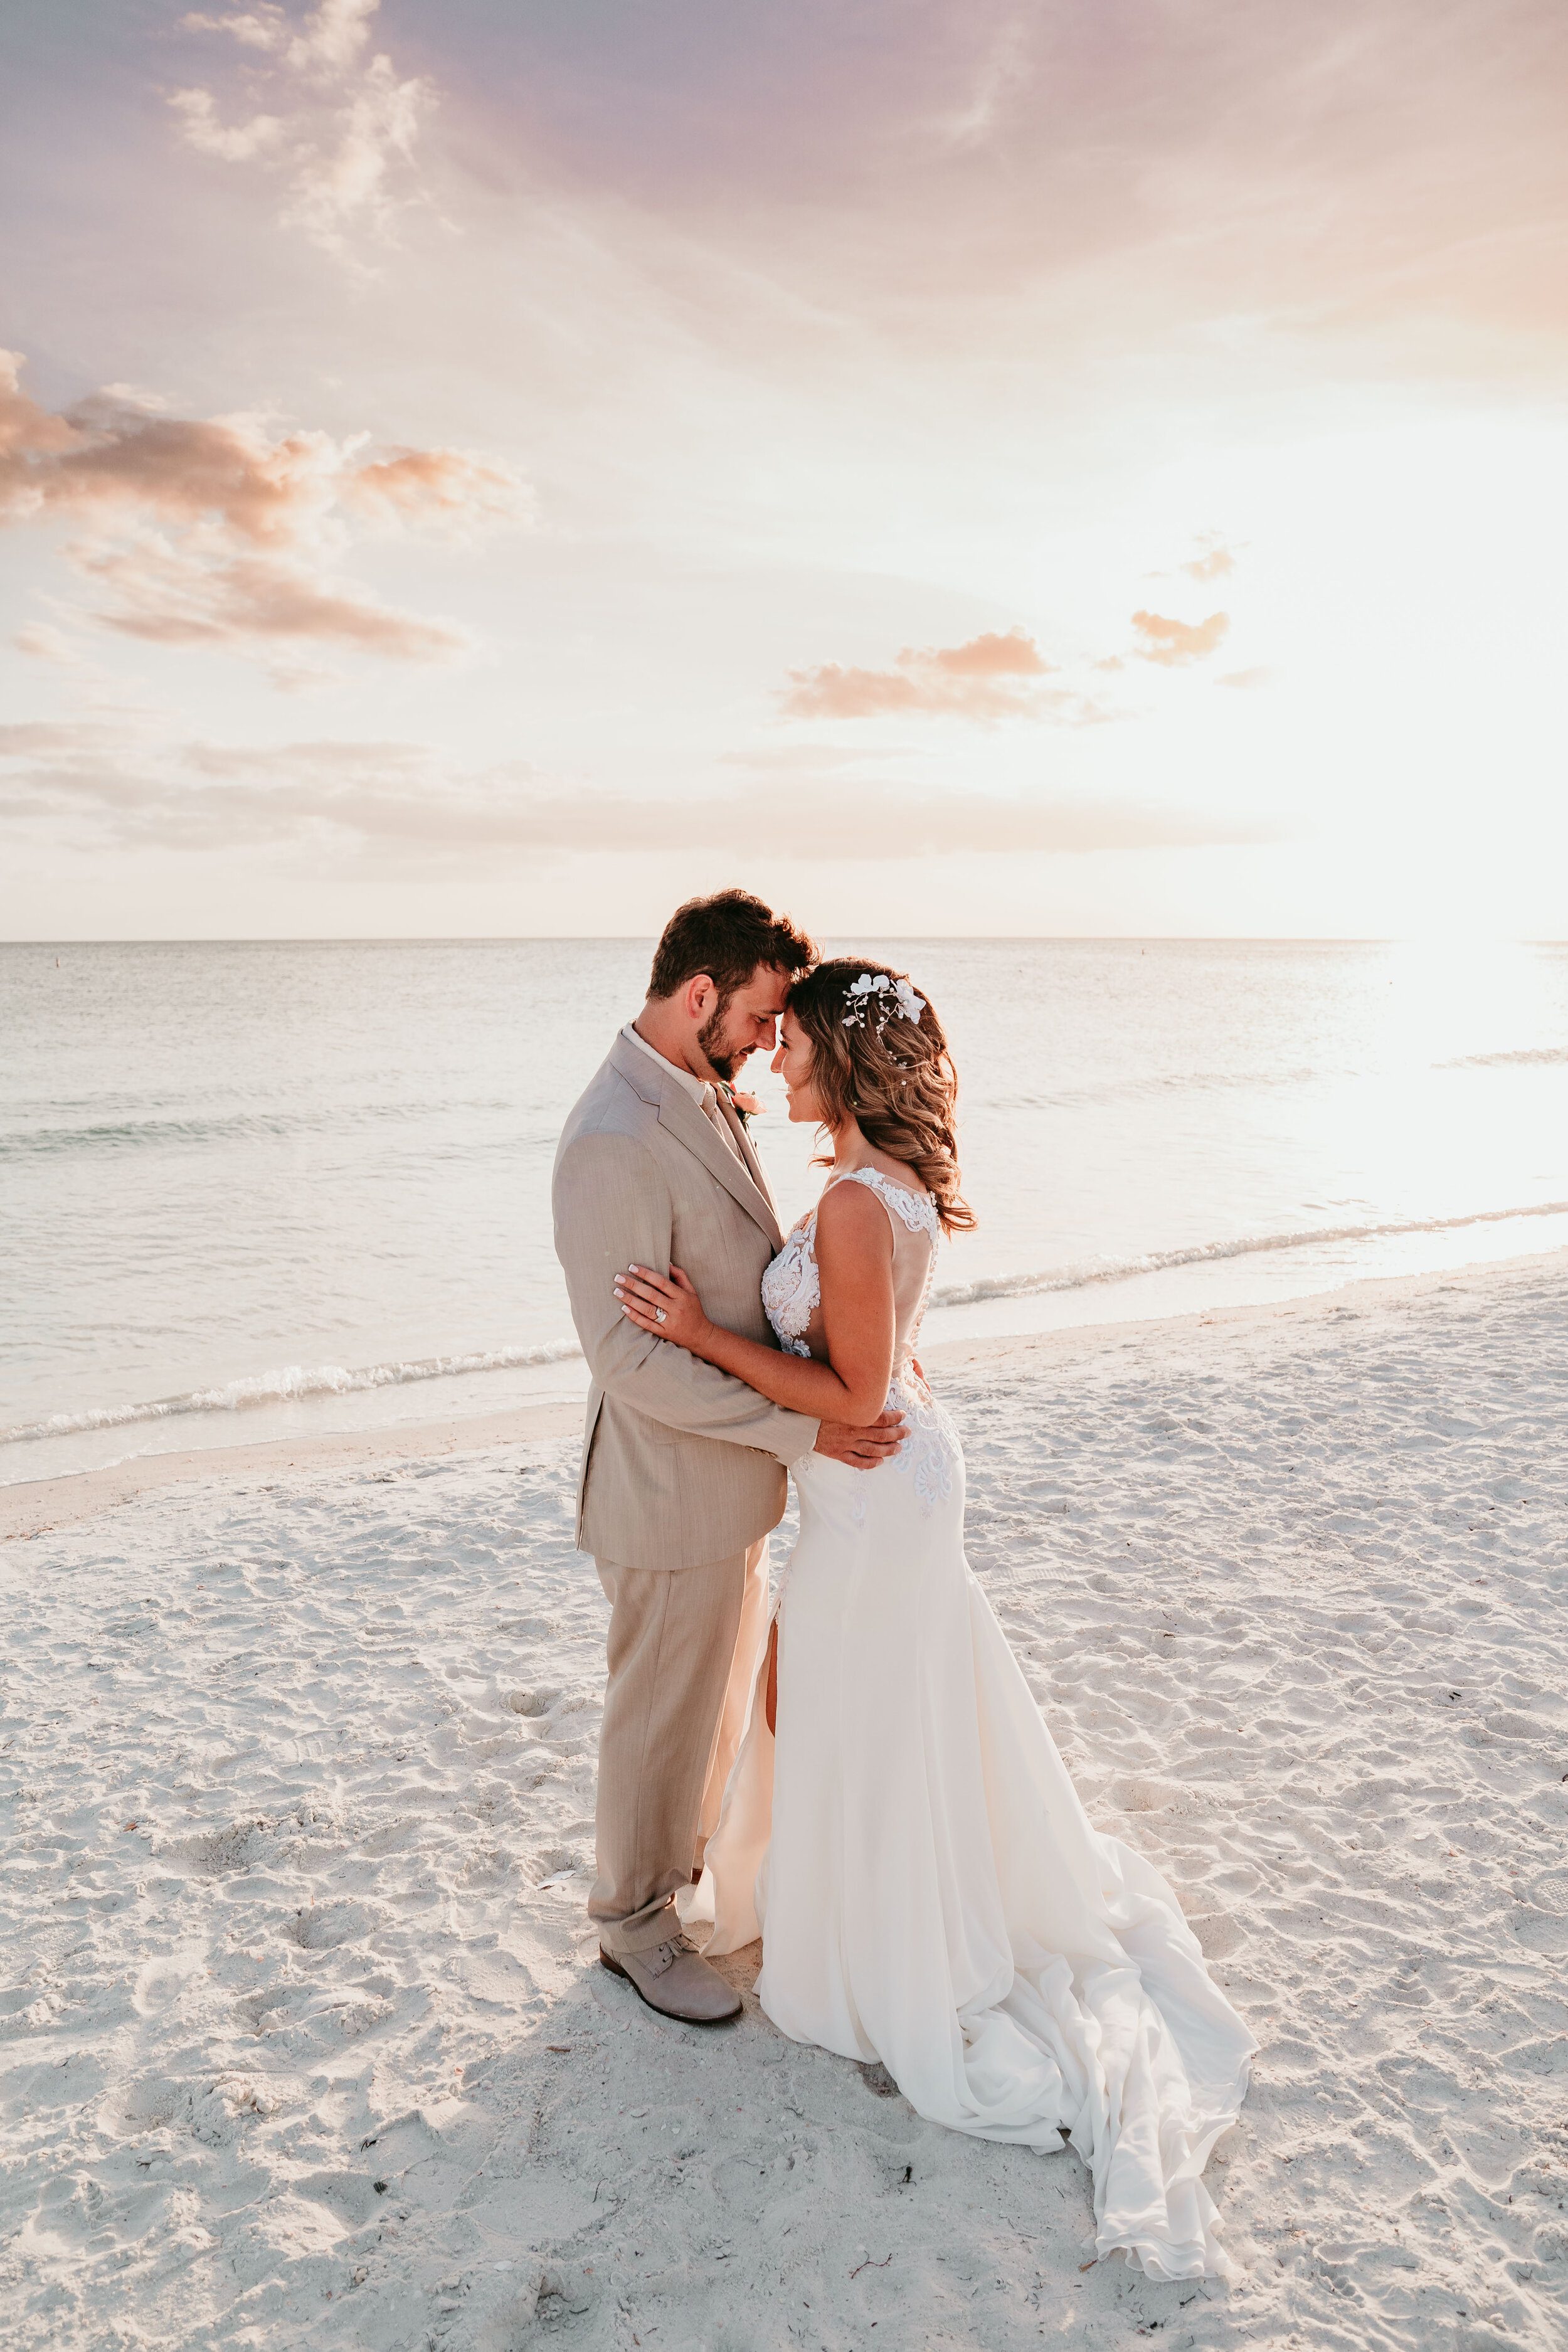 Florida Beach Wedding Photographer: Talan and Dan's Beach Wedding at Tradewinds Island Resorts